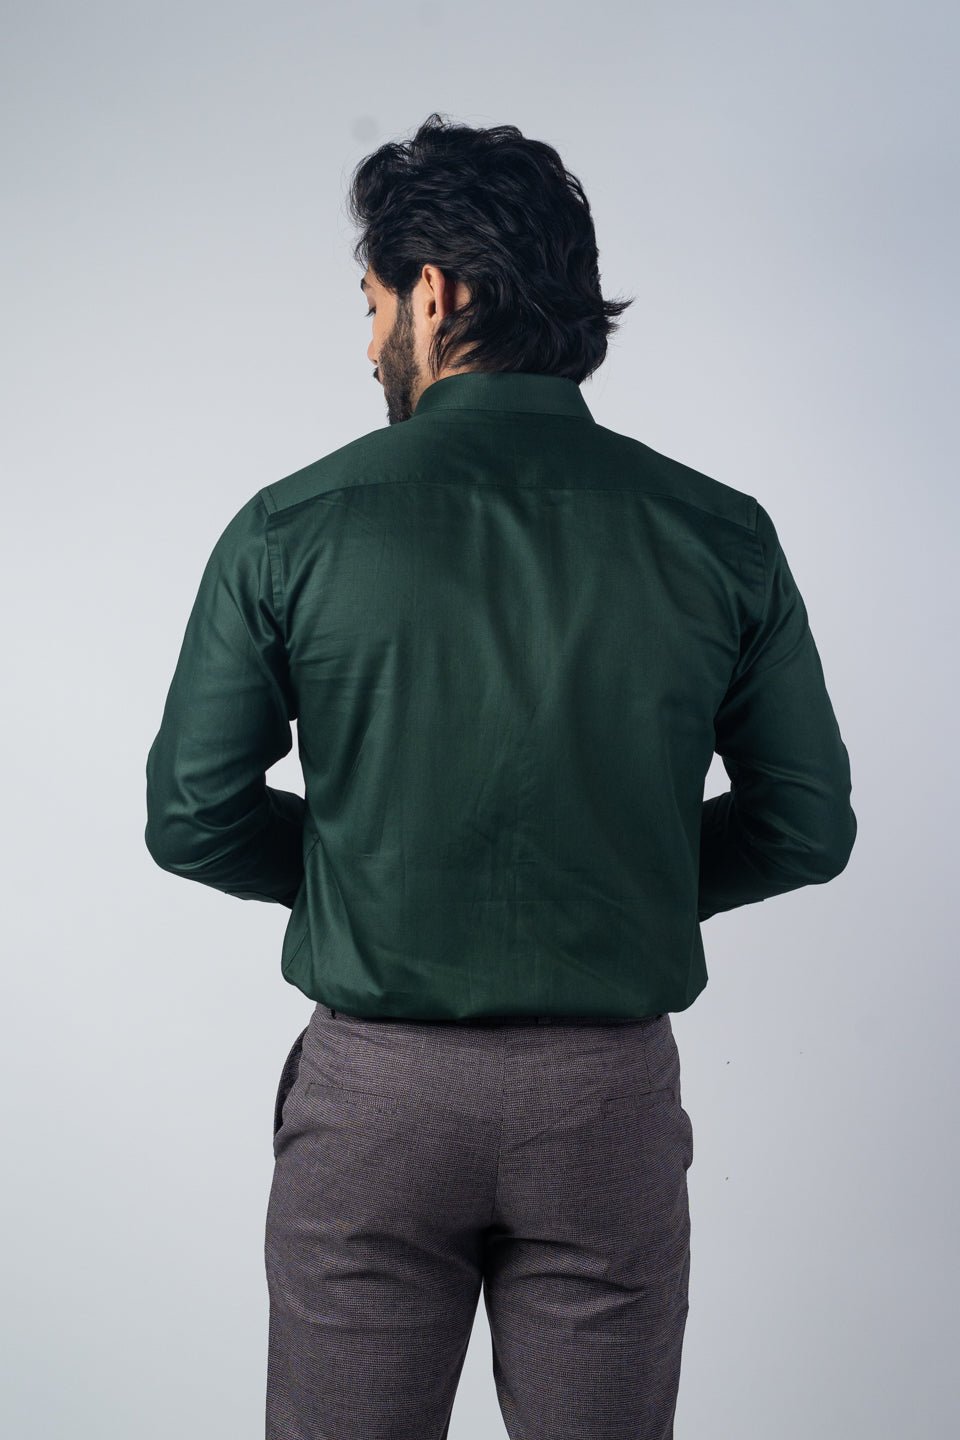 Forest Green Color Micro Checks Texture Satin Cotton Shirt For Men - Punekar Cotton